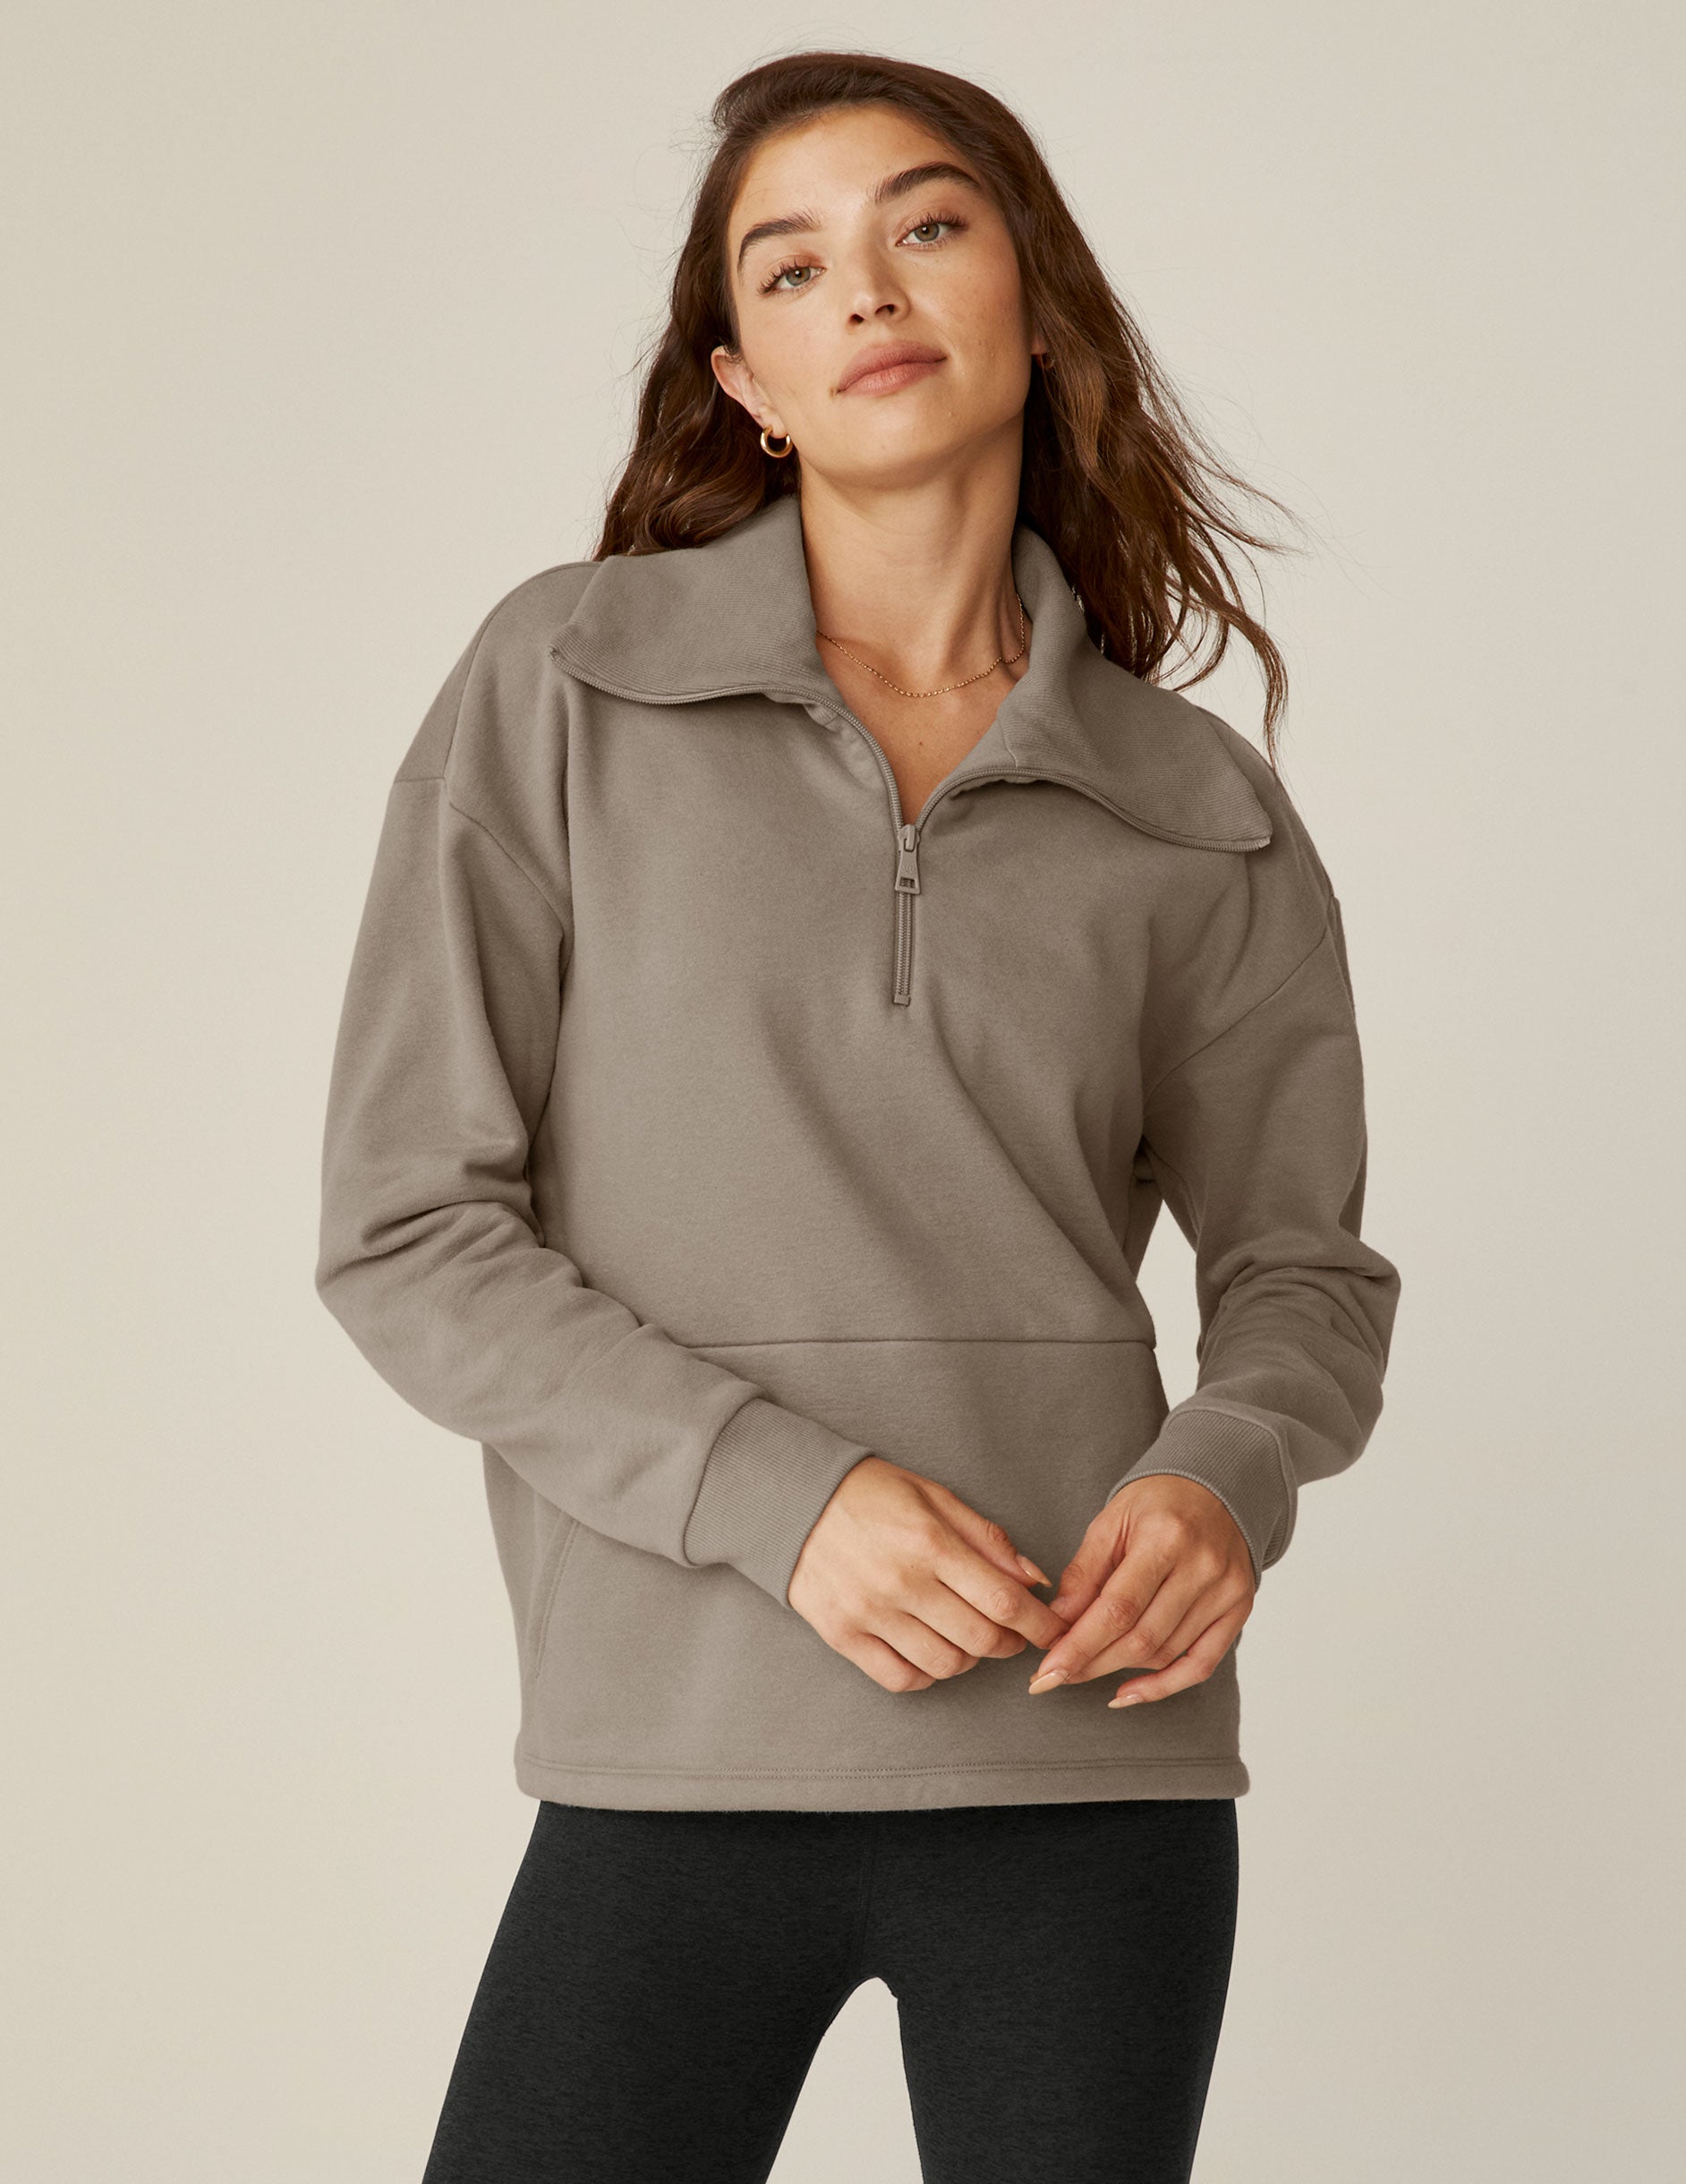 brown quarter zip pullover with a kangaroo pocket. 